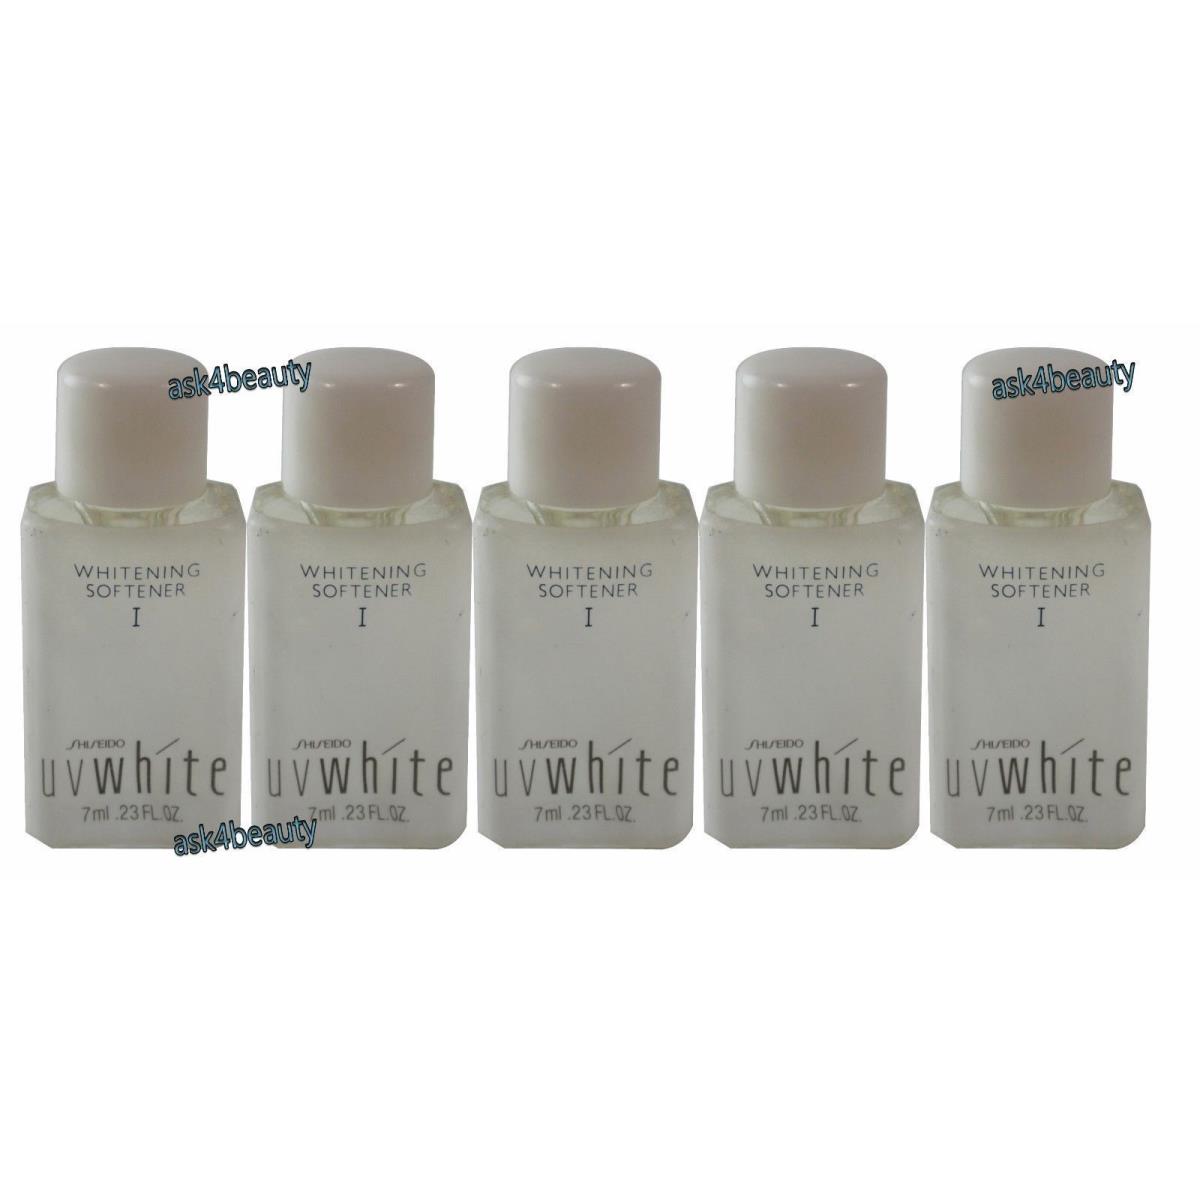 Shiseido Whitening Softener l UV White 7ml Choose Qty Sample Size N U